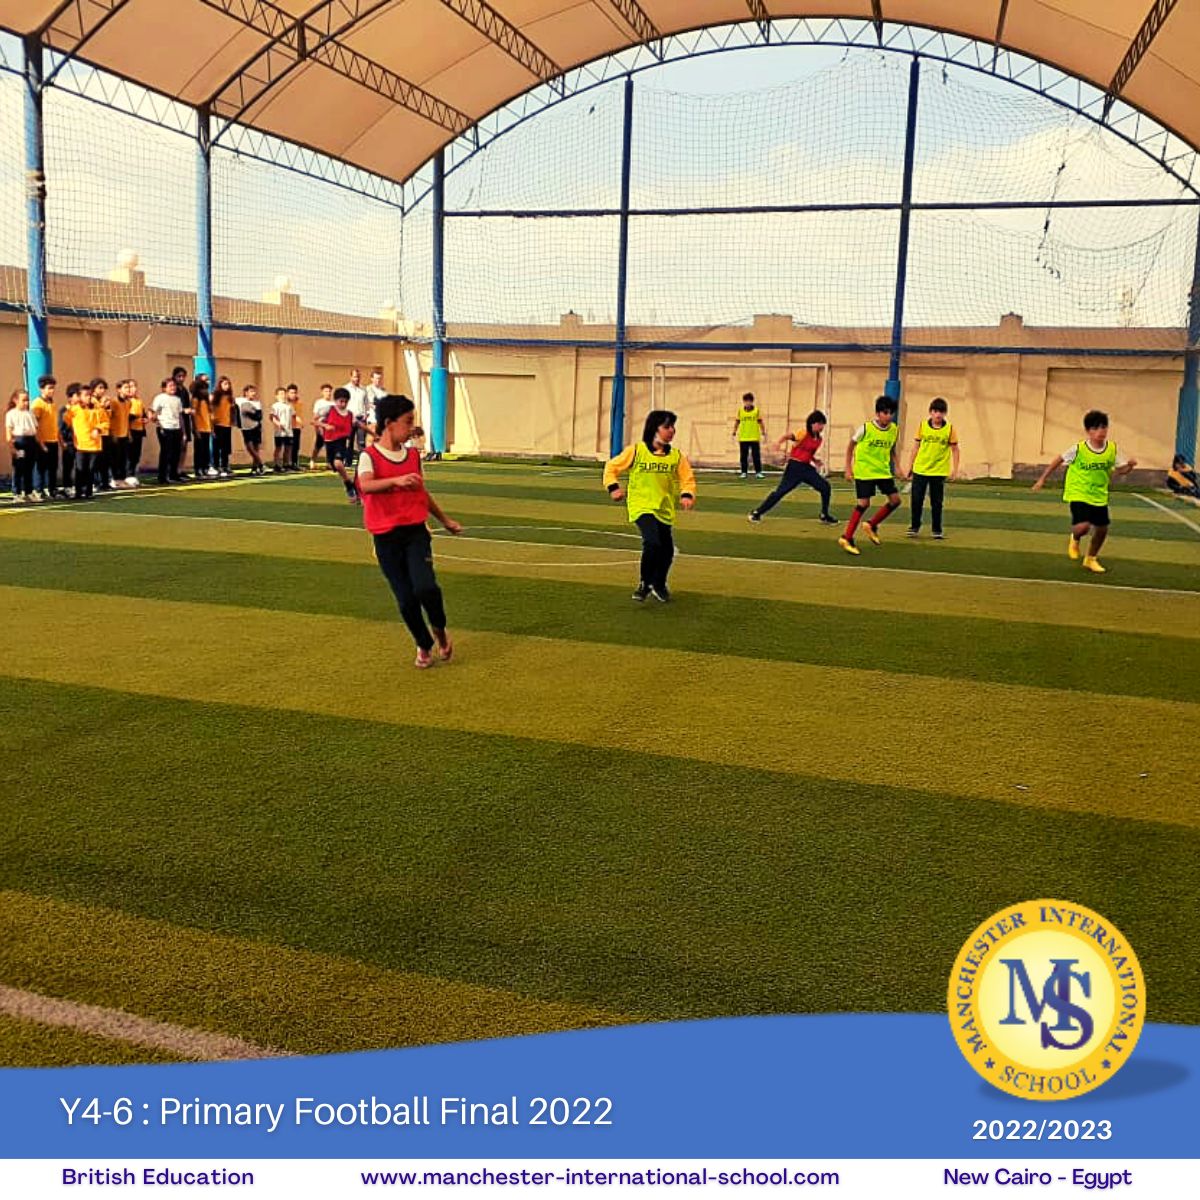 Y4-6 : Primary Football Final 2022